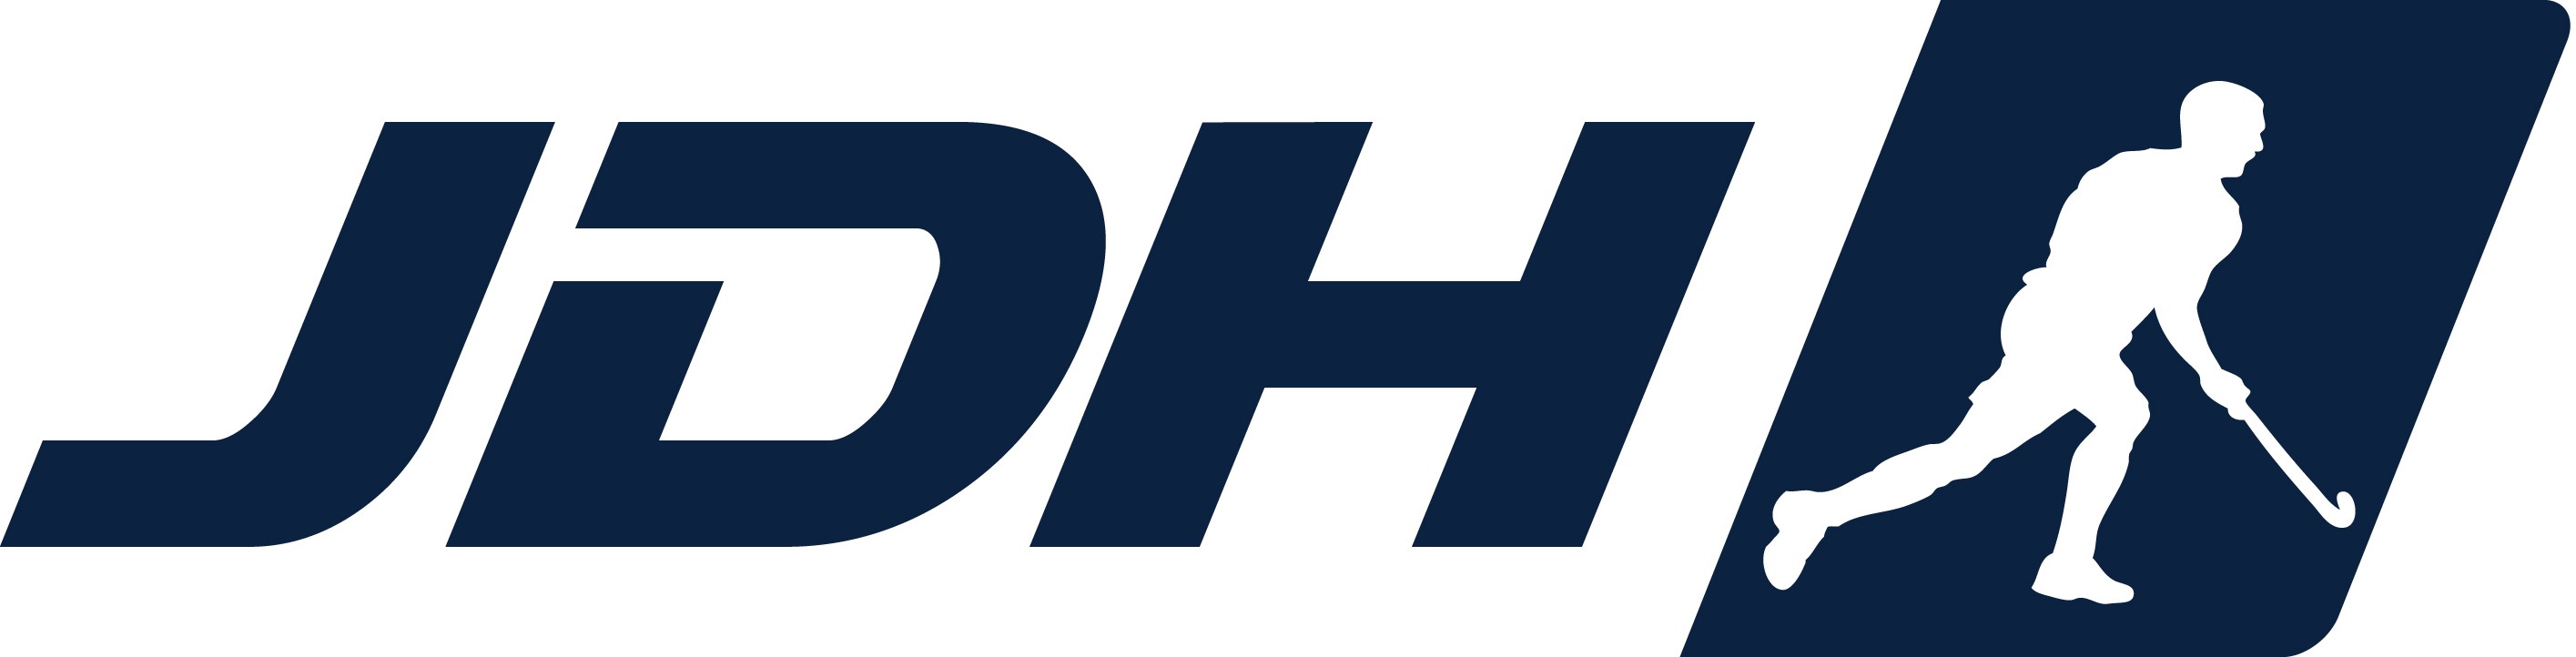 JDH hockey